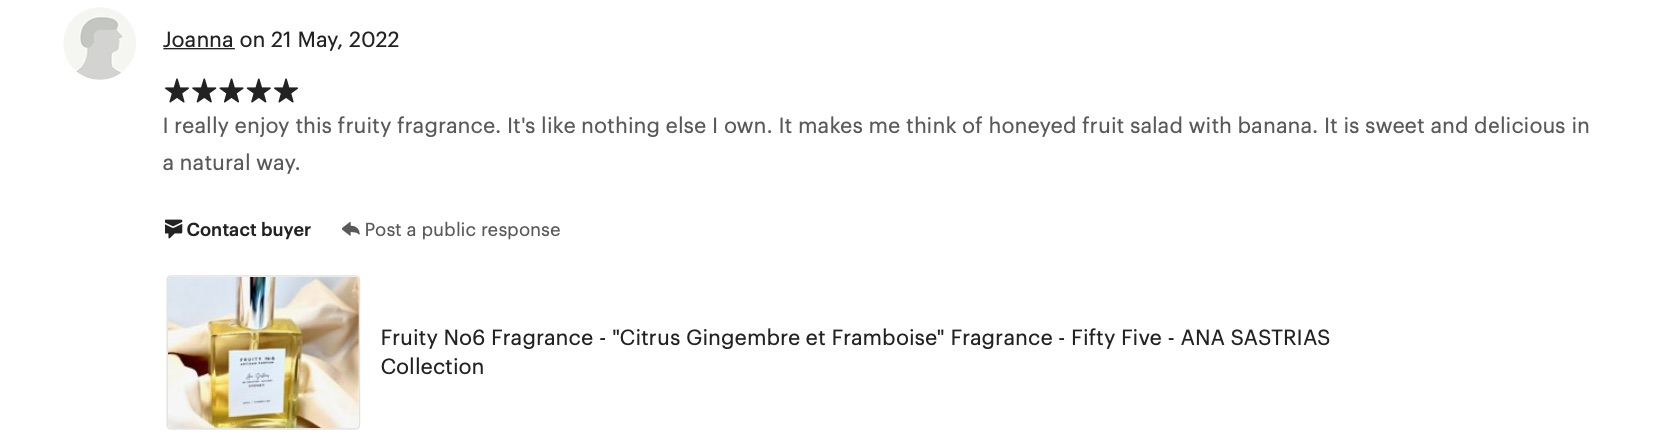 Joanna feedback about Fruity No6 perfume